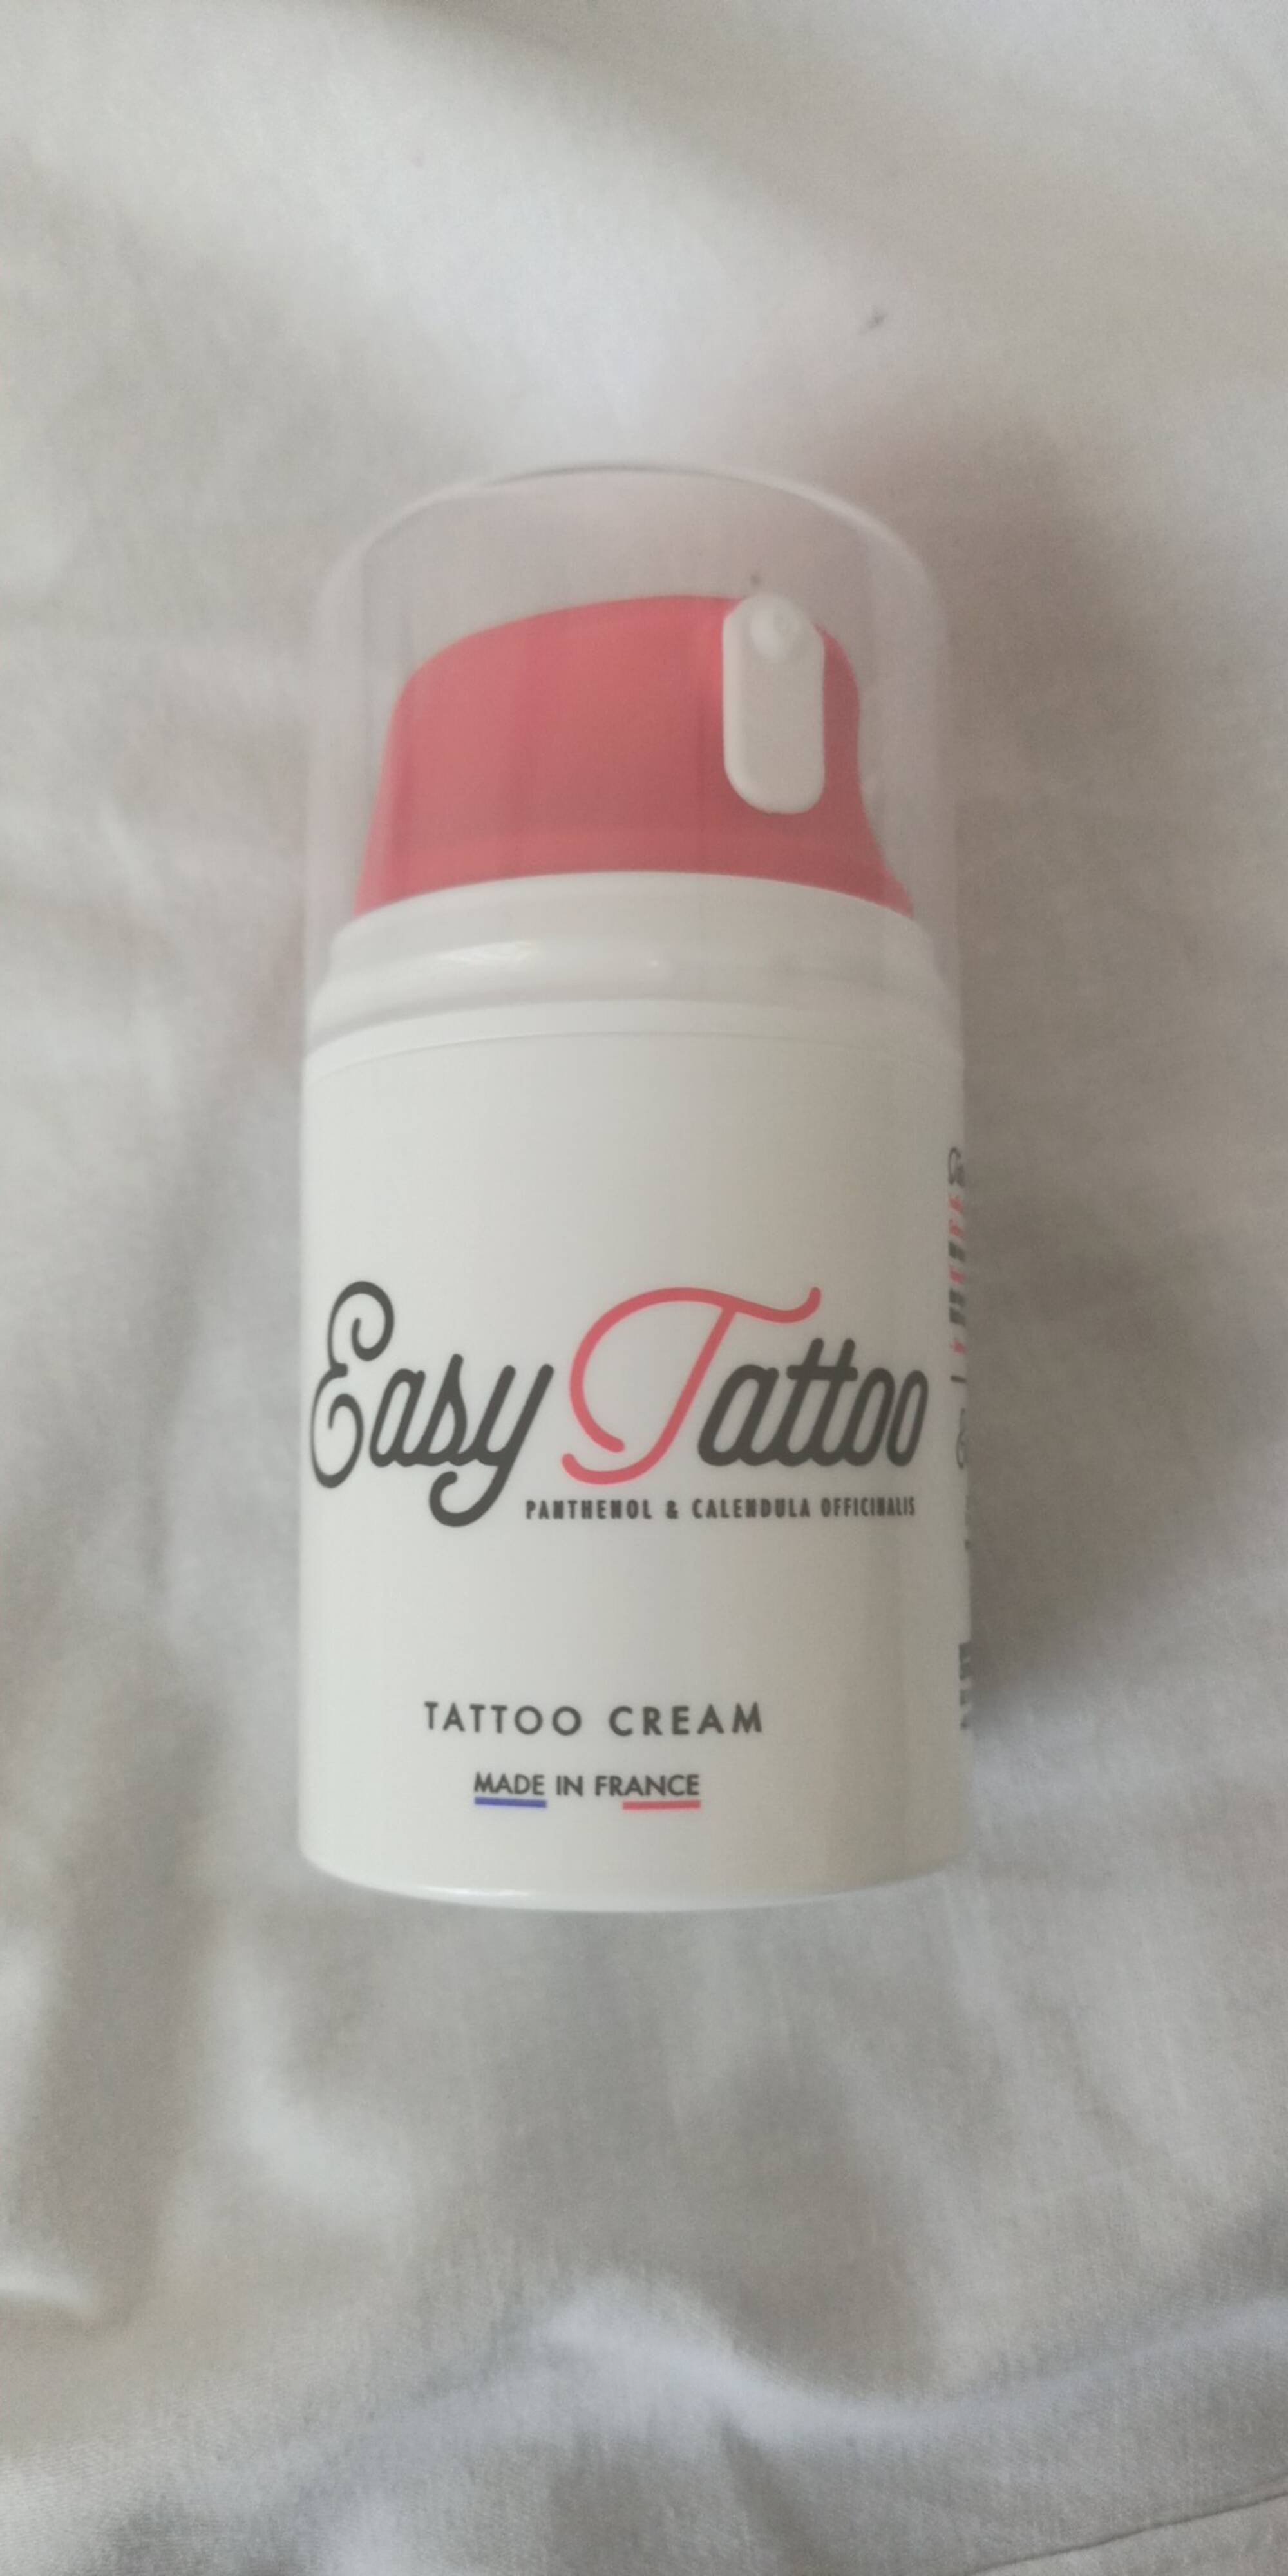 Easytattoo 100ml. Tattoo Creme, Tattoopflege Creme, Tattoo Aftercare | eBay